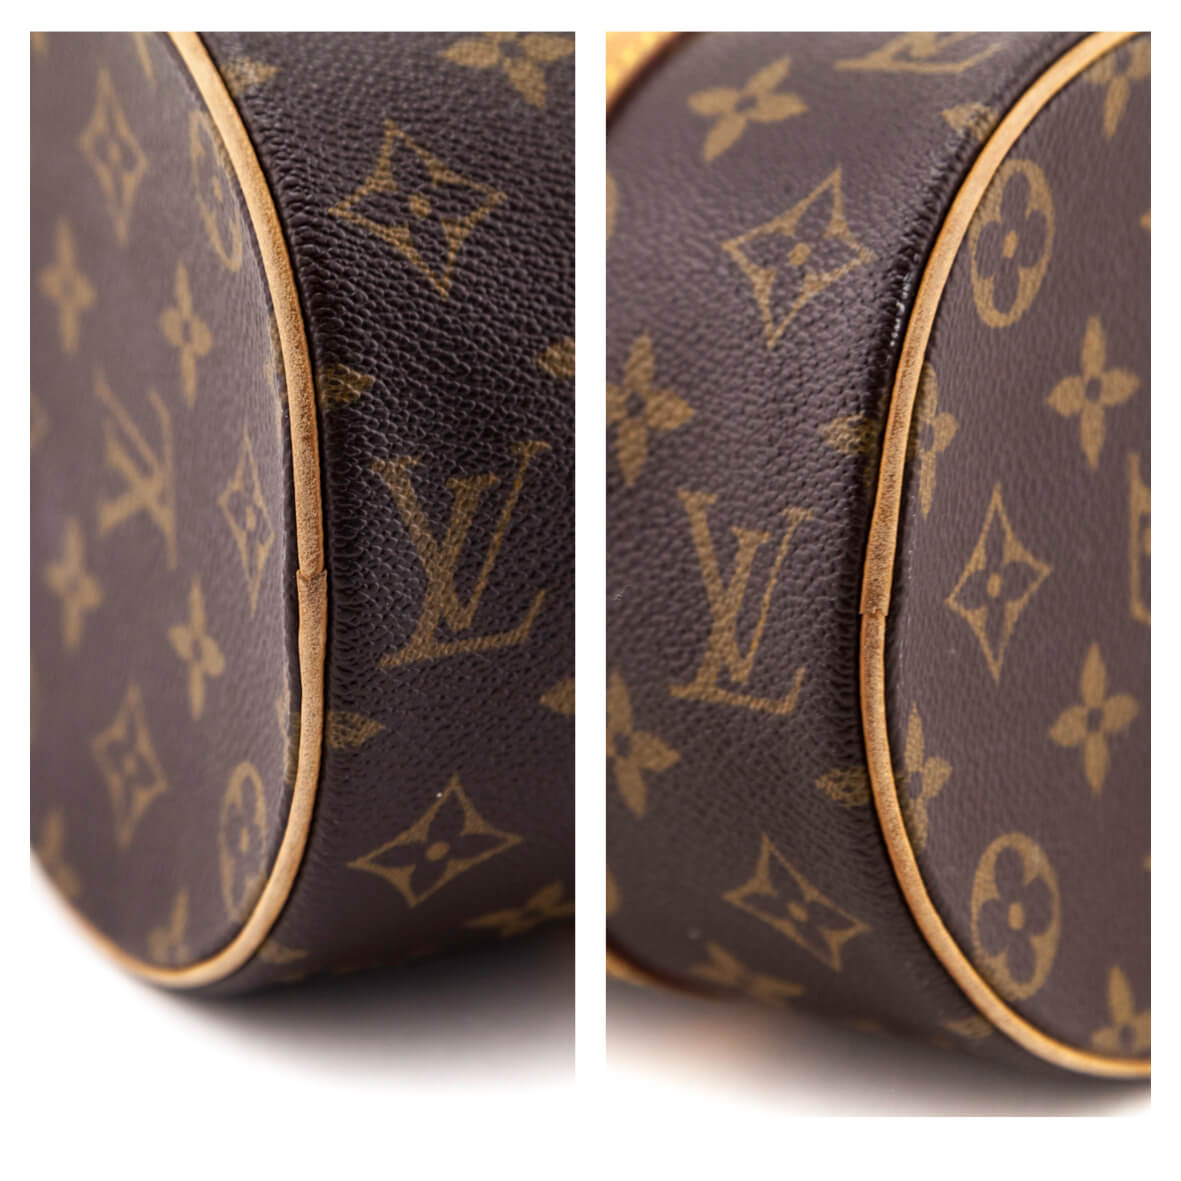  LOUIS VUITTON M51366 Papillon 26 Old Monogram Tube Handbag  Monogram Canvas Women Used : Clothing, Shoes & Jewelry